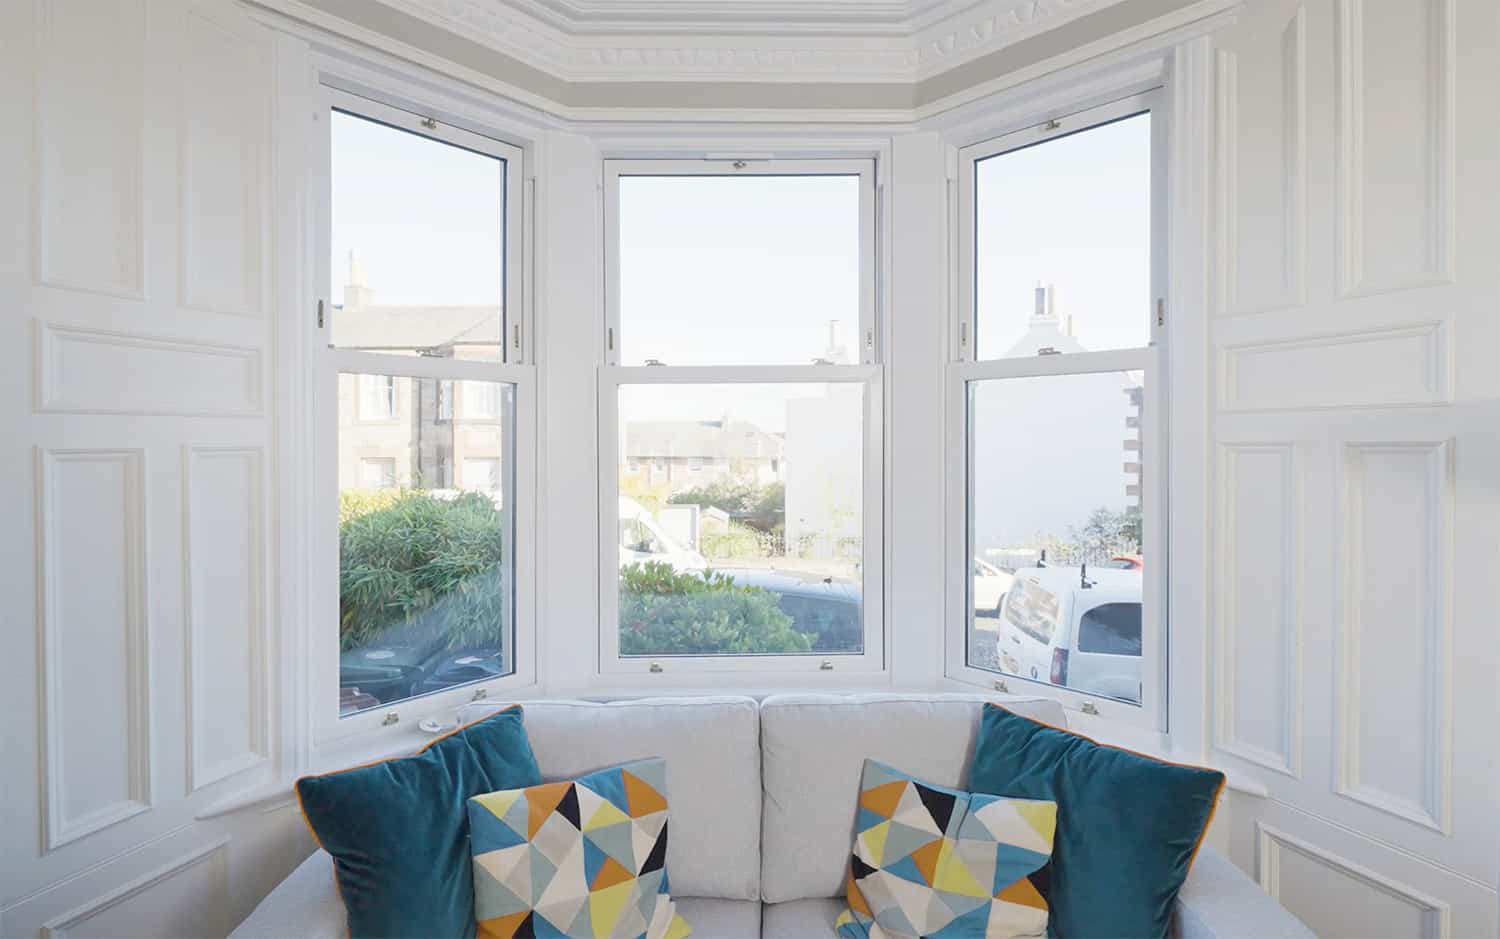 Living room bay window with white upvc sliding sash windows